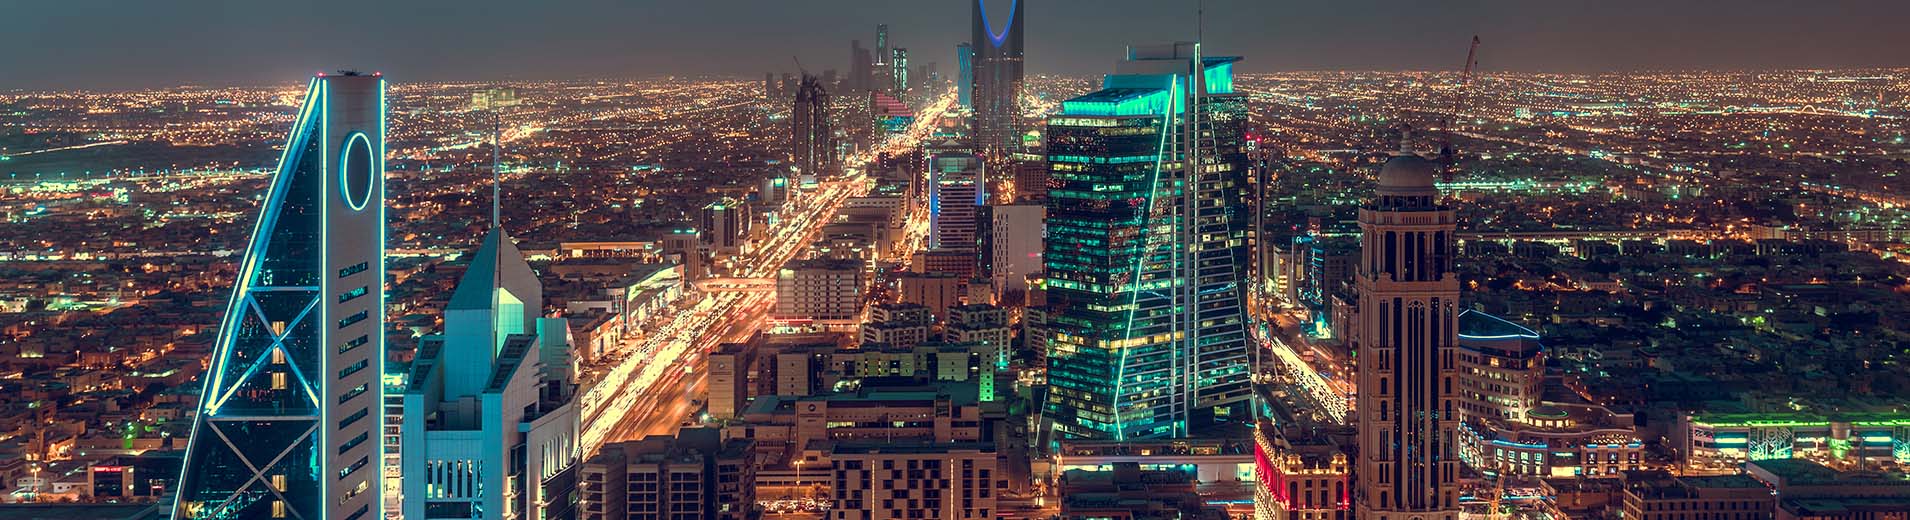 Riyadh_Saudi_Arabia_City_L_0321_1910x520